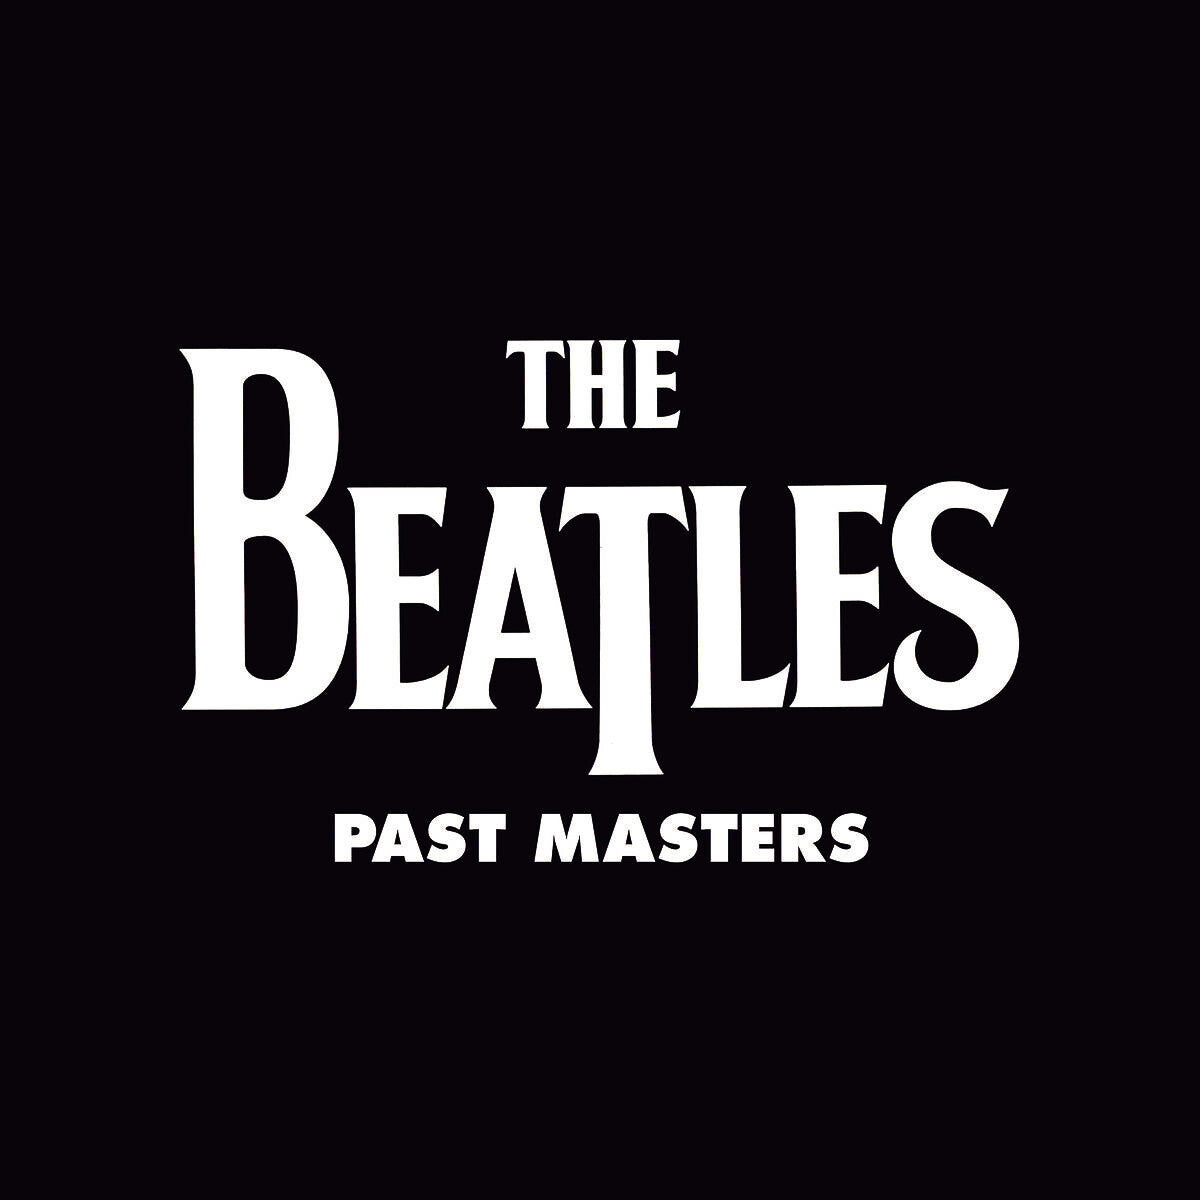 https://images.bravado.de/prod/product-assets/product-asset-data/beatles-the/the-beatles-international-1/products/143067/web/319576/image-thumb__319576__3000x3000_original/The-Beatles-Past-Masters-Vinyl-143067-319576.jpg